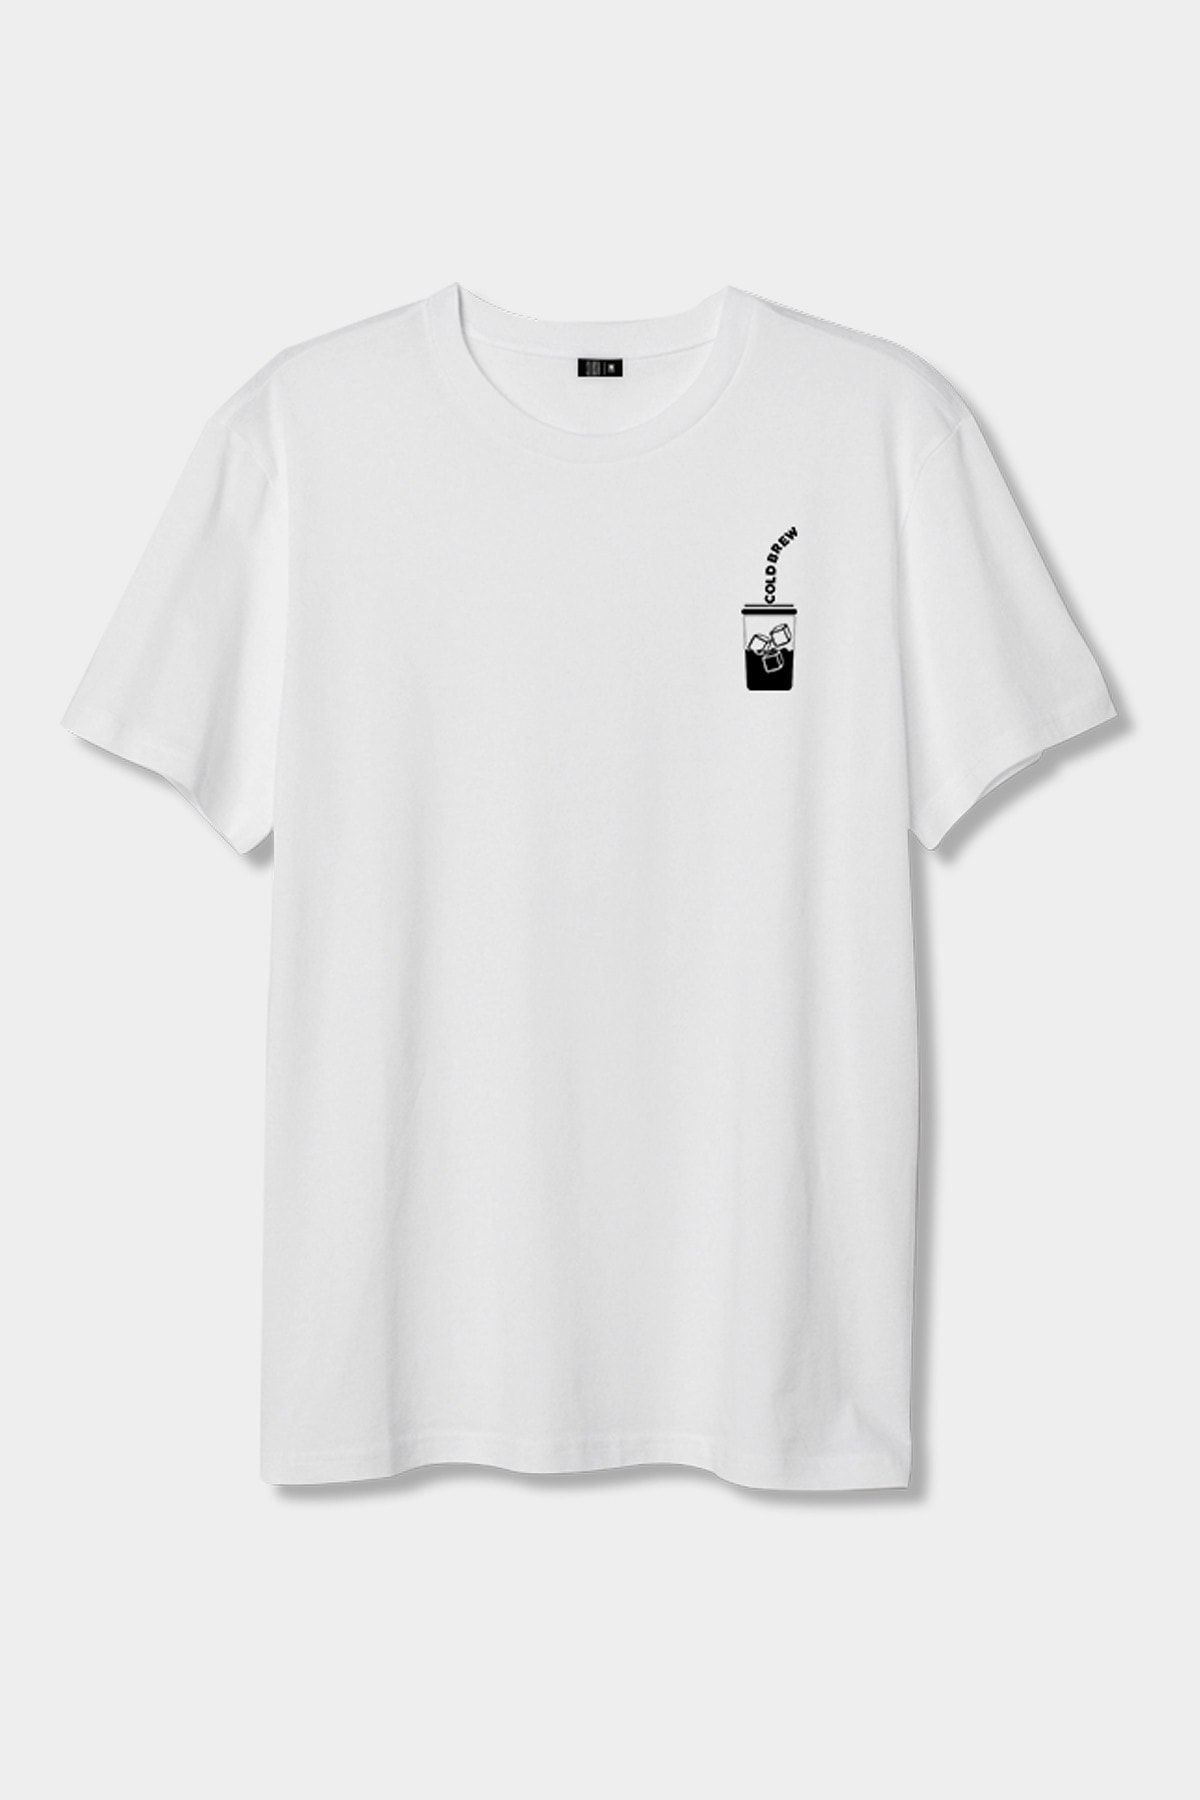 Slush Jobs Unisex Beyaz Cold Brew T-Shirt SLS7454CB